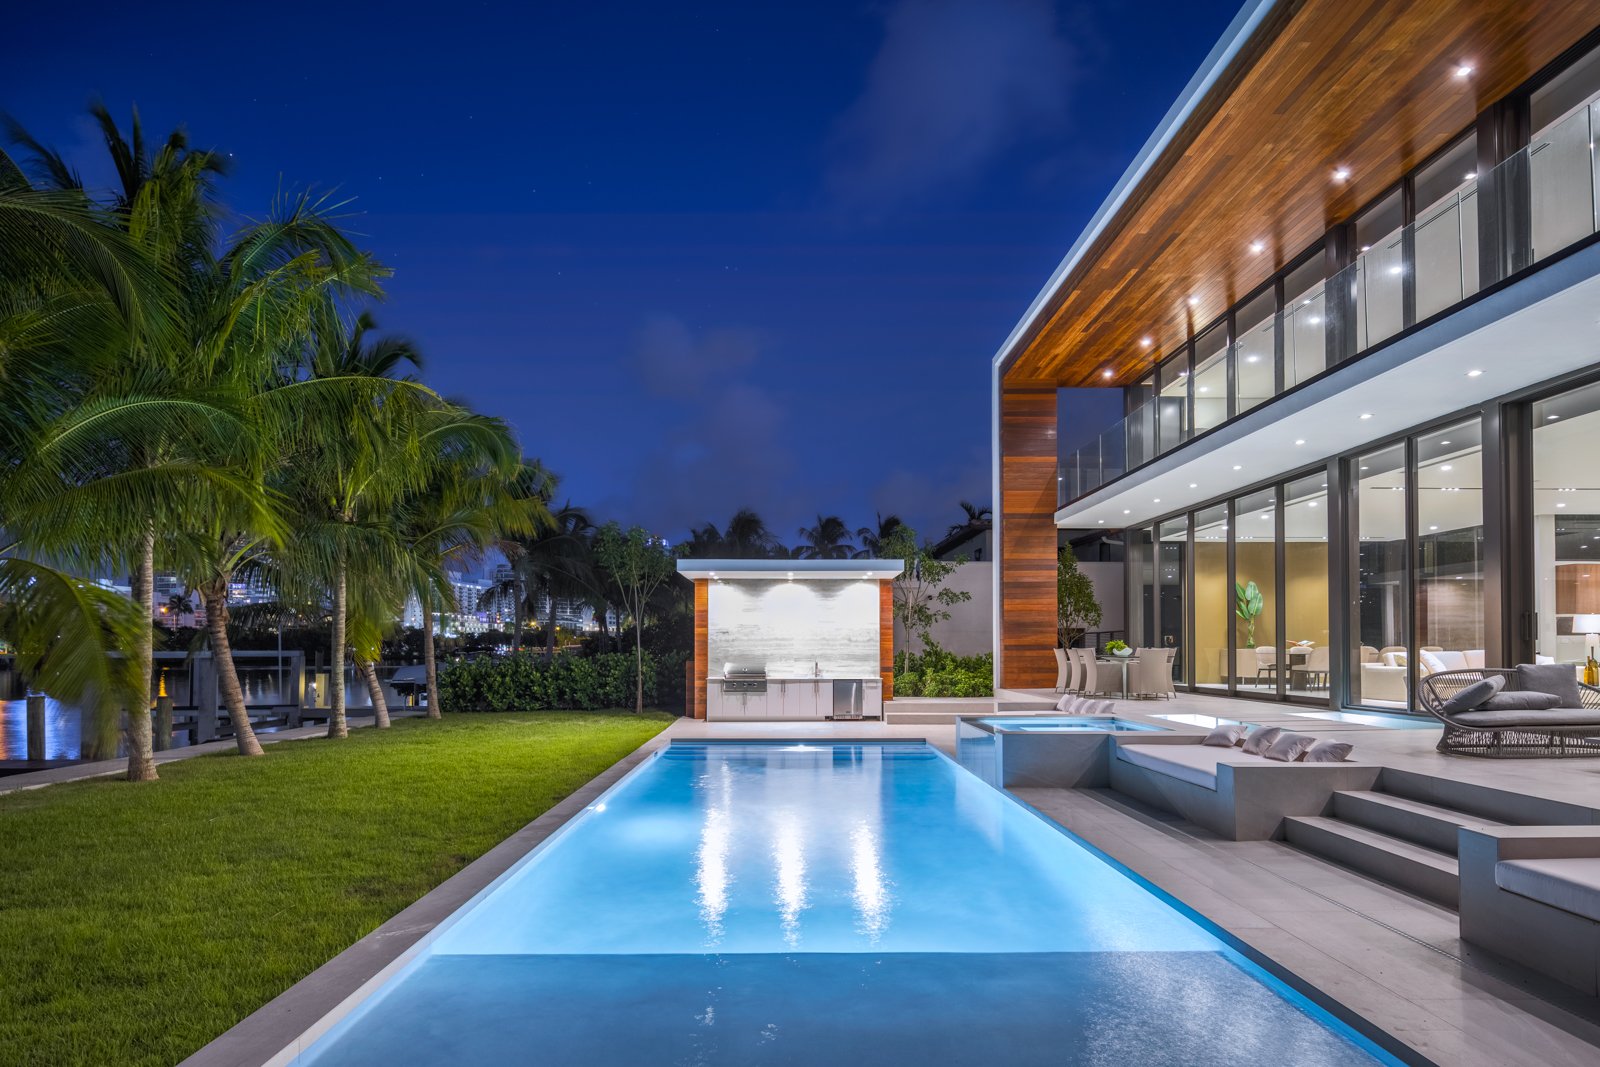 Grammy Award-Winning Rapper Future Buys Allison Island Home For $16.3 Million On Miami Beach 27.jpg